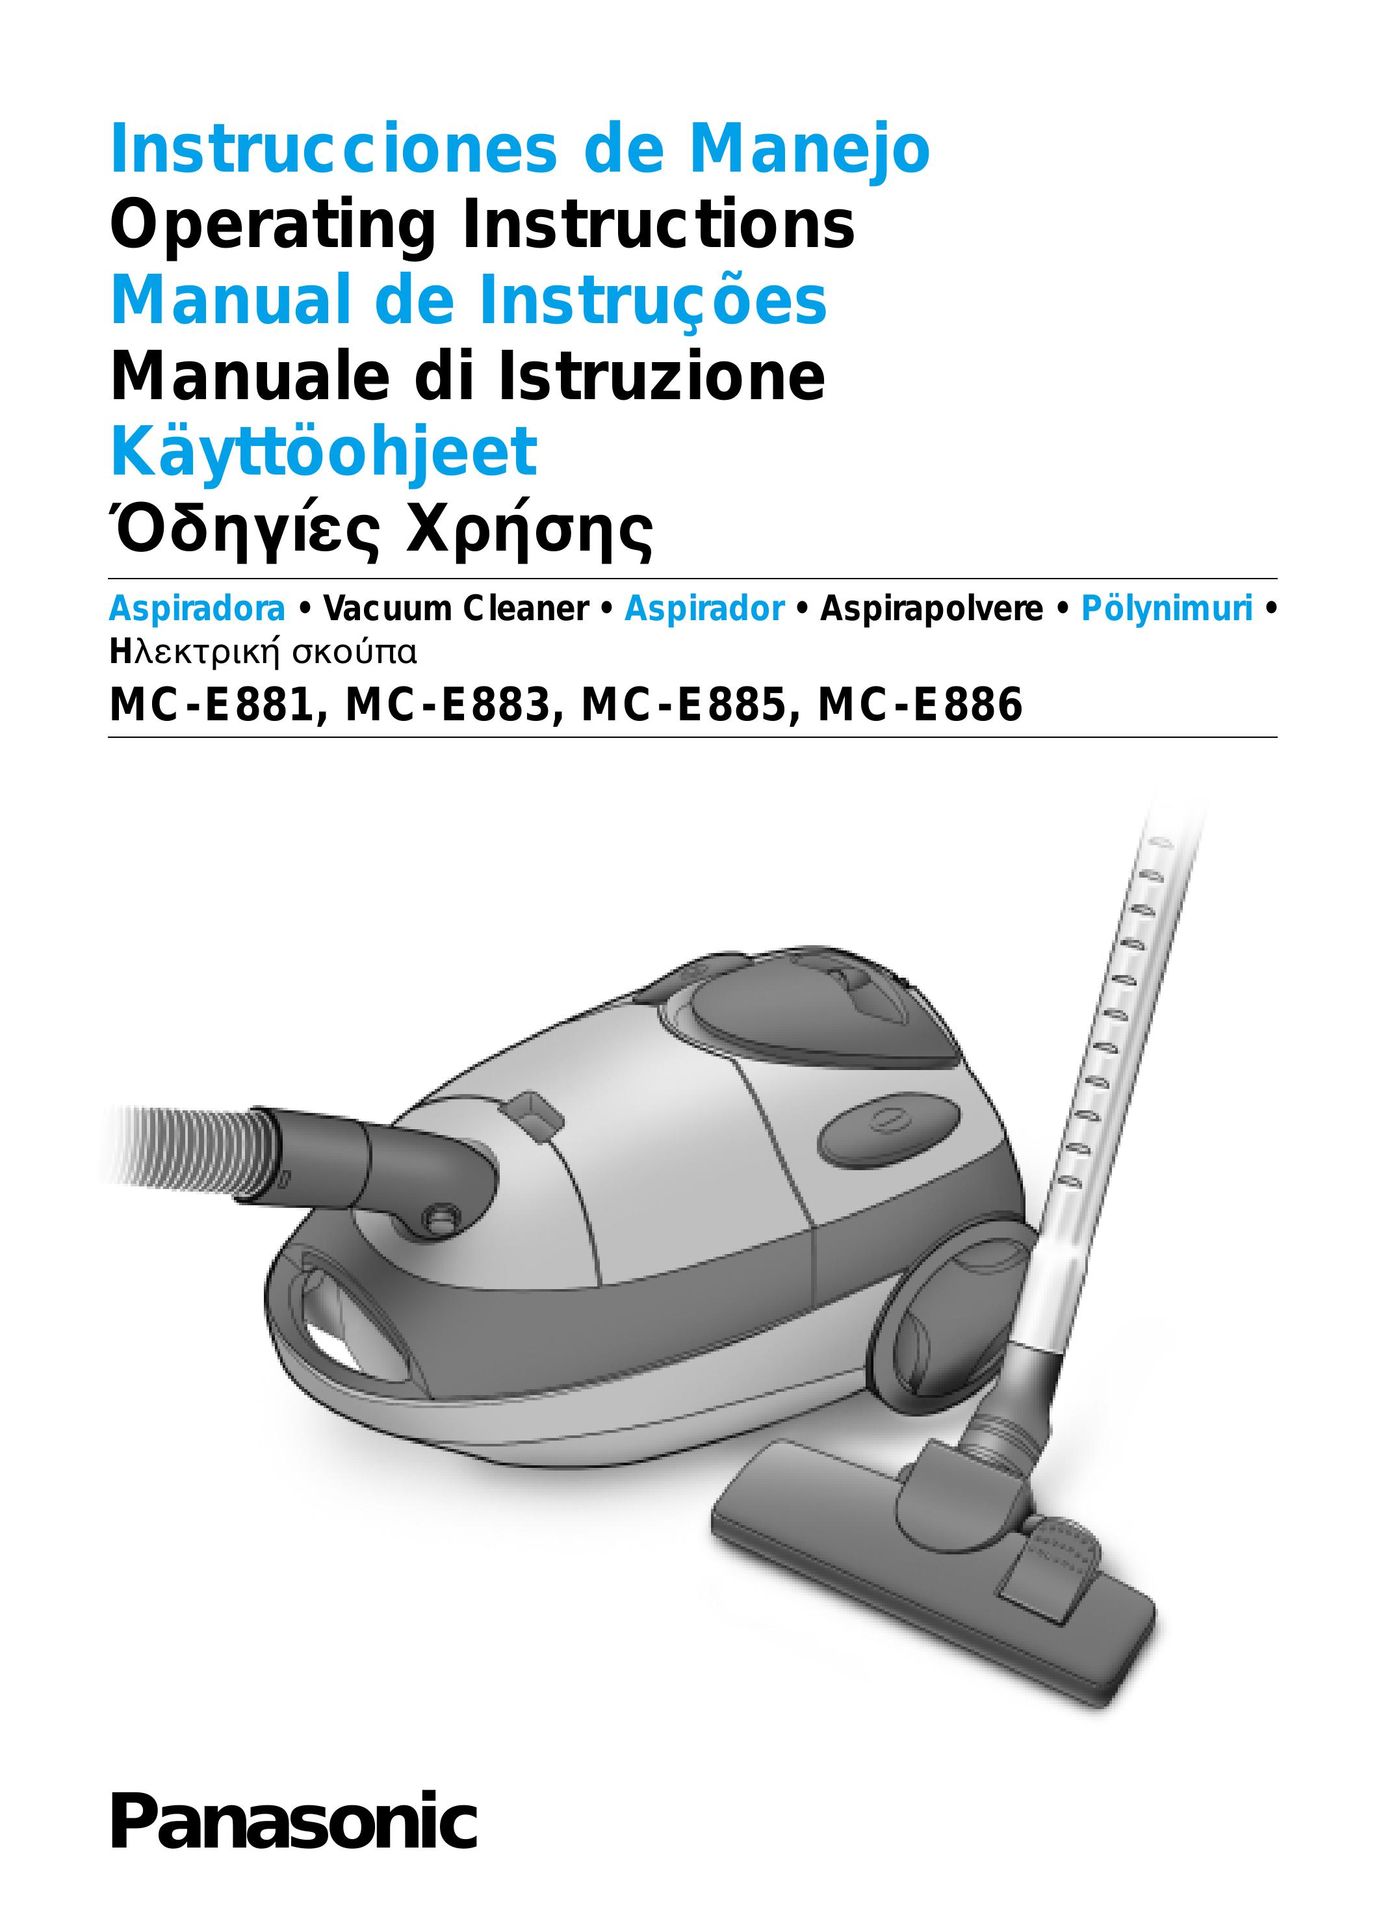 Panasonic MC-E883 Vacuum Cleaner User Manual